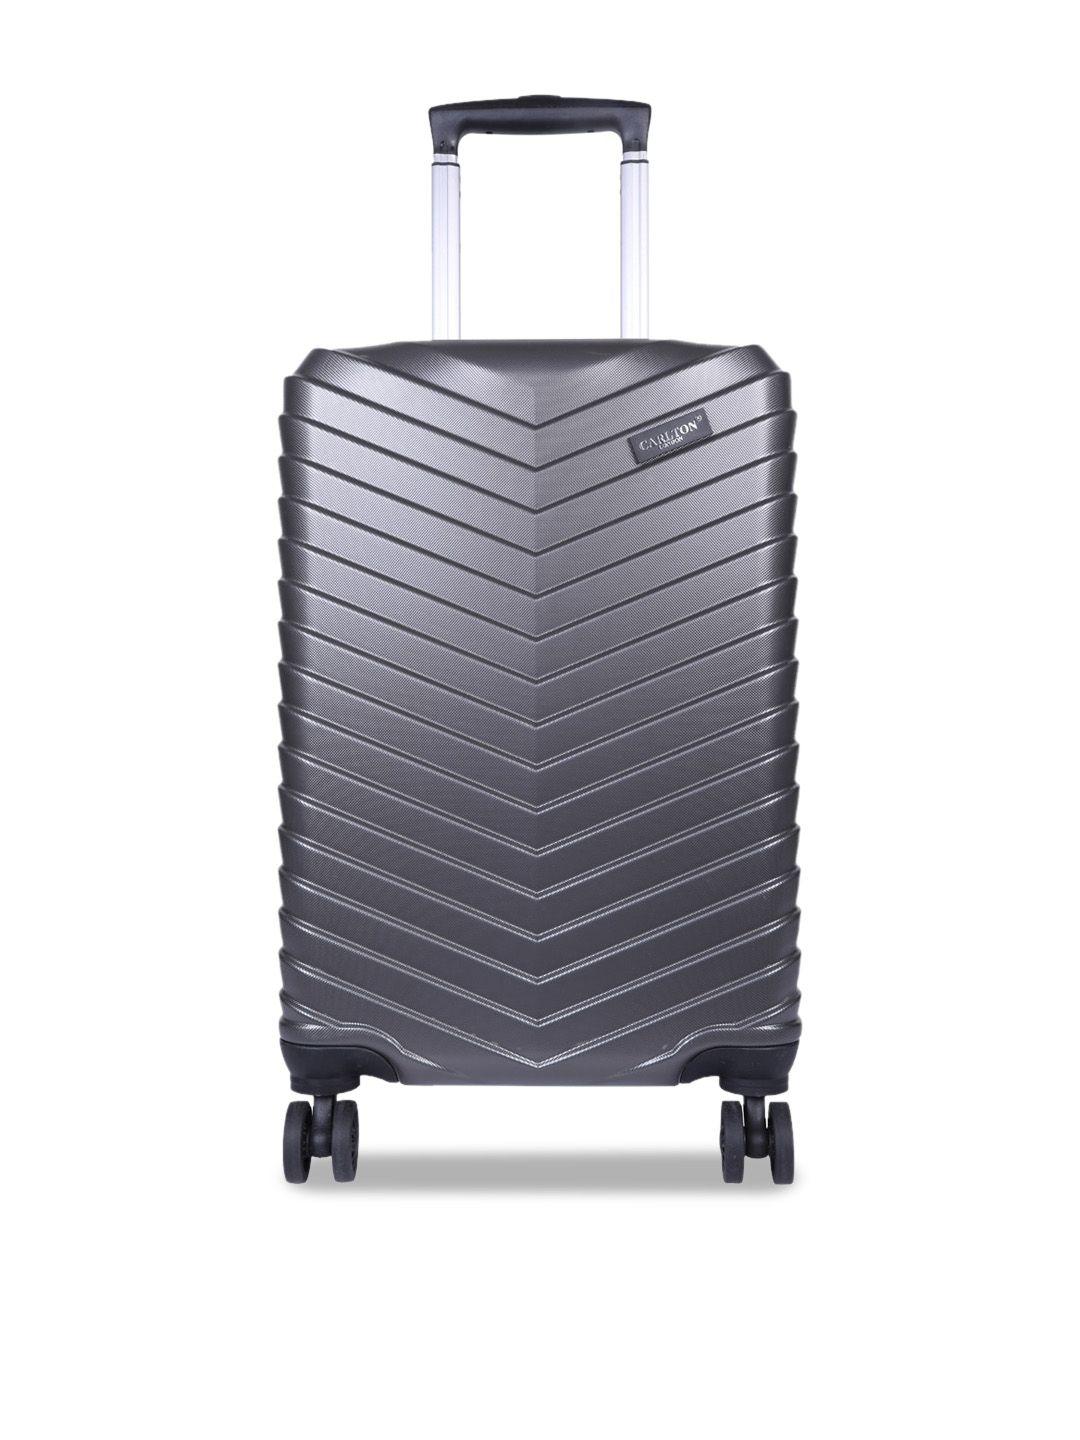 carlton-london-textured-cabin-suitcase-trolley-bag